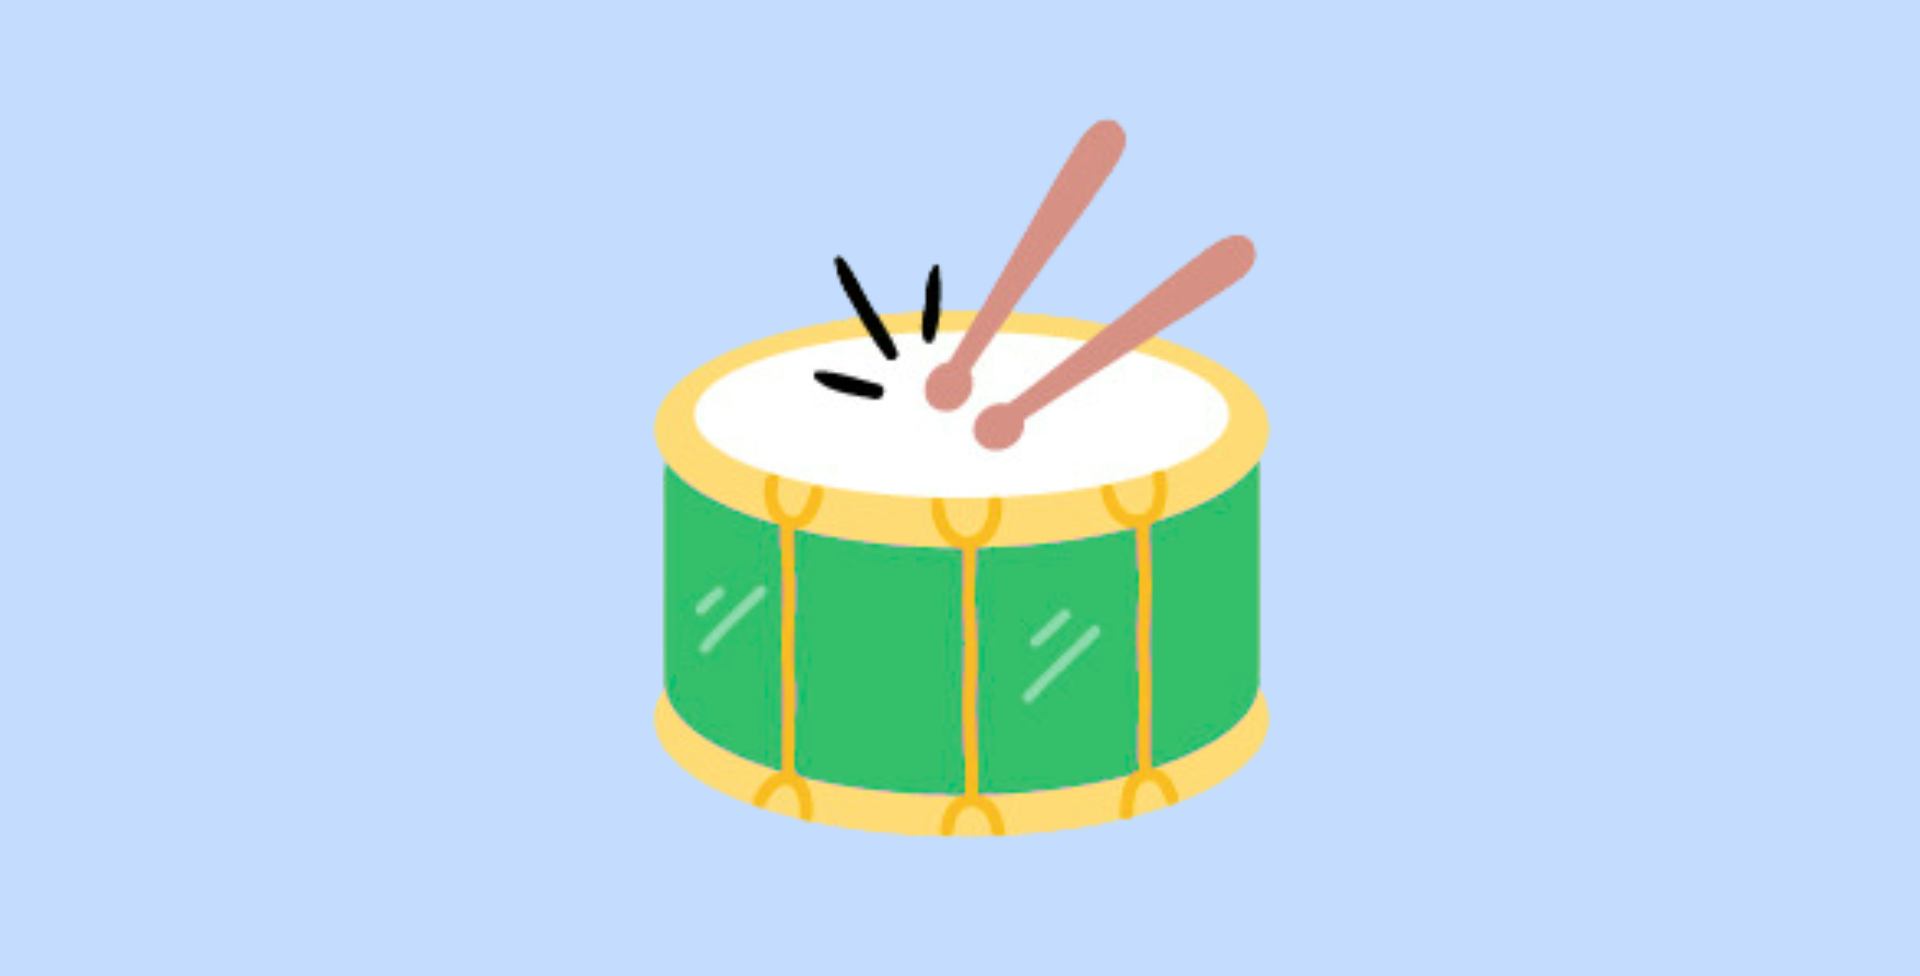 meditative drumming, cartoon drum on blue background